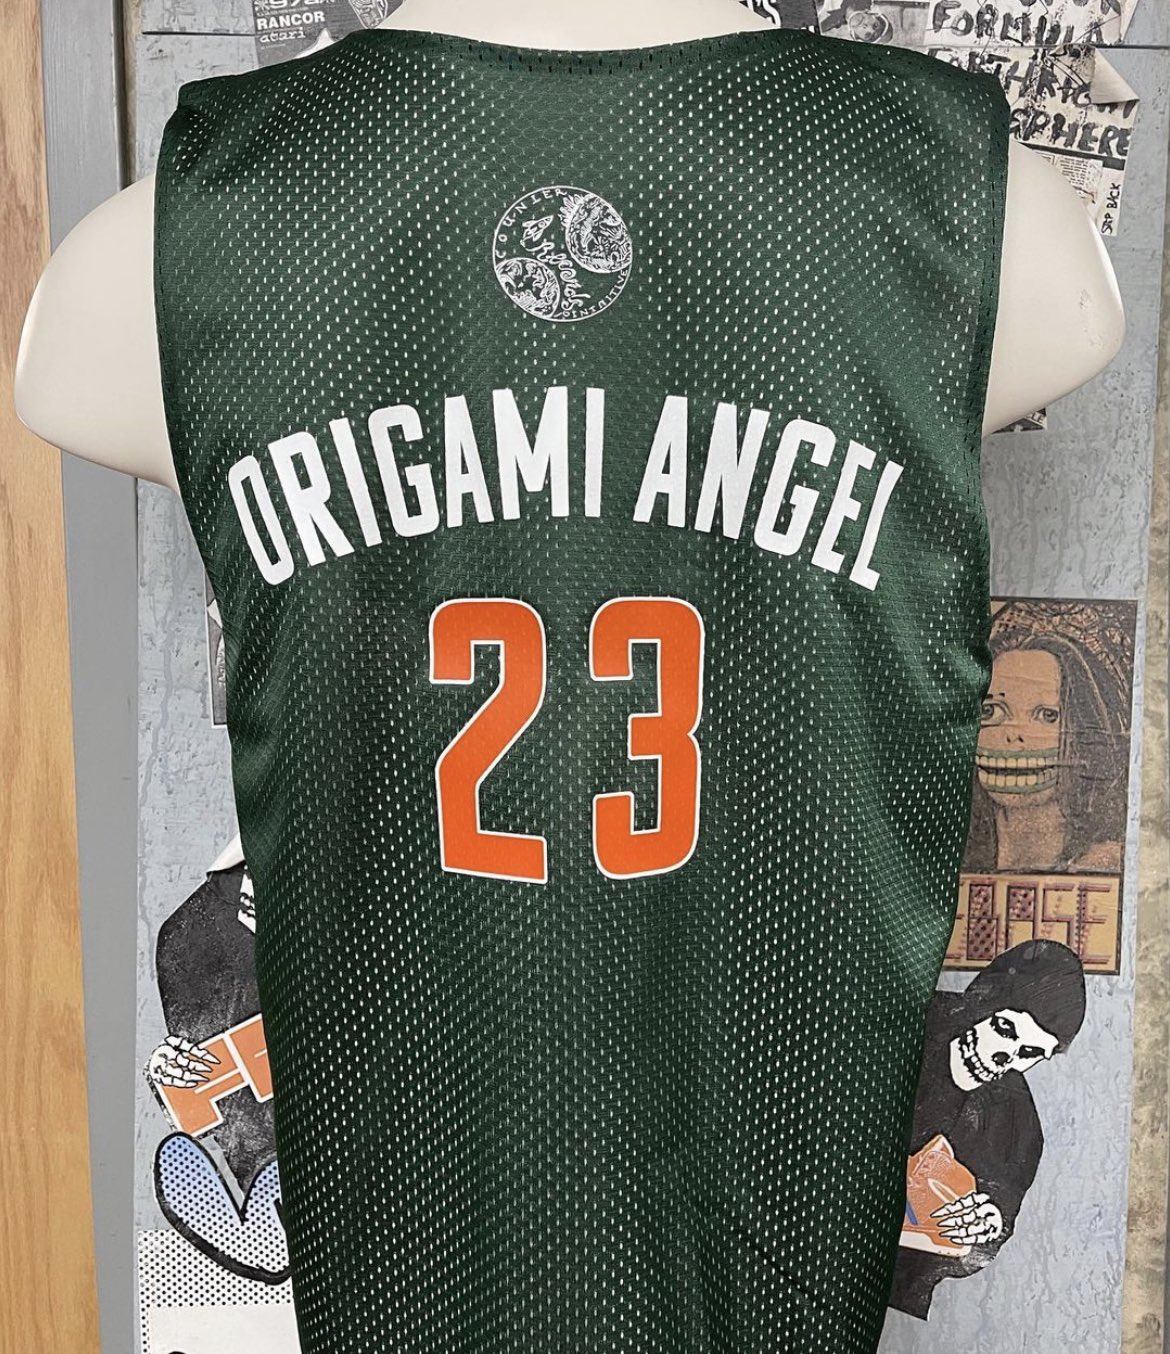 Origami Angel Jersey